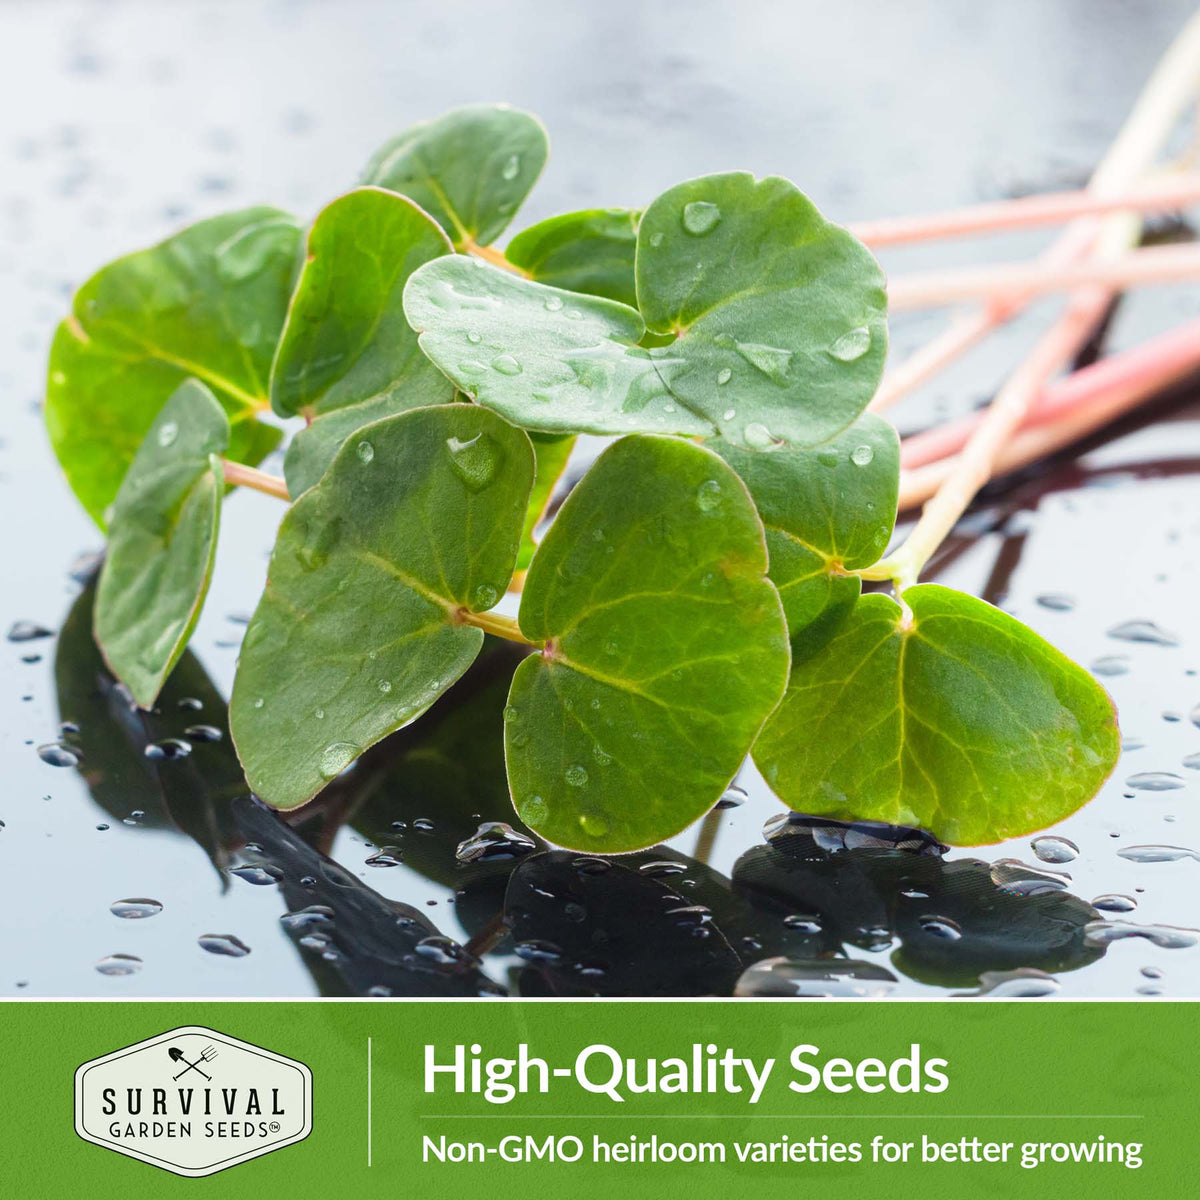 Buckwheat microgreen seeds are high quality heirloom seeds